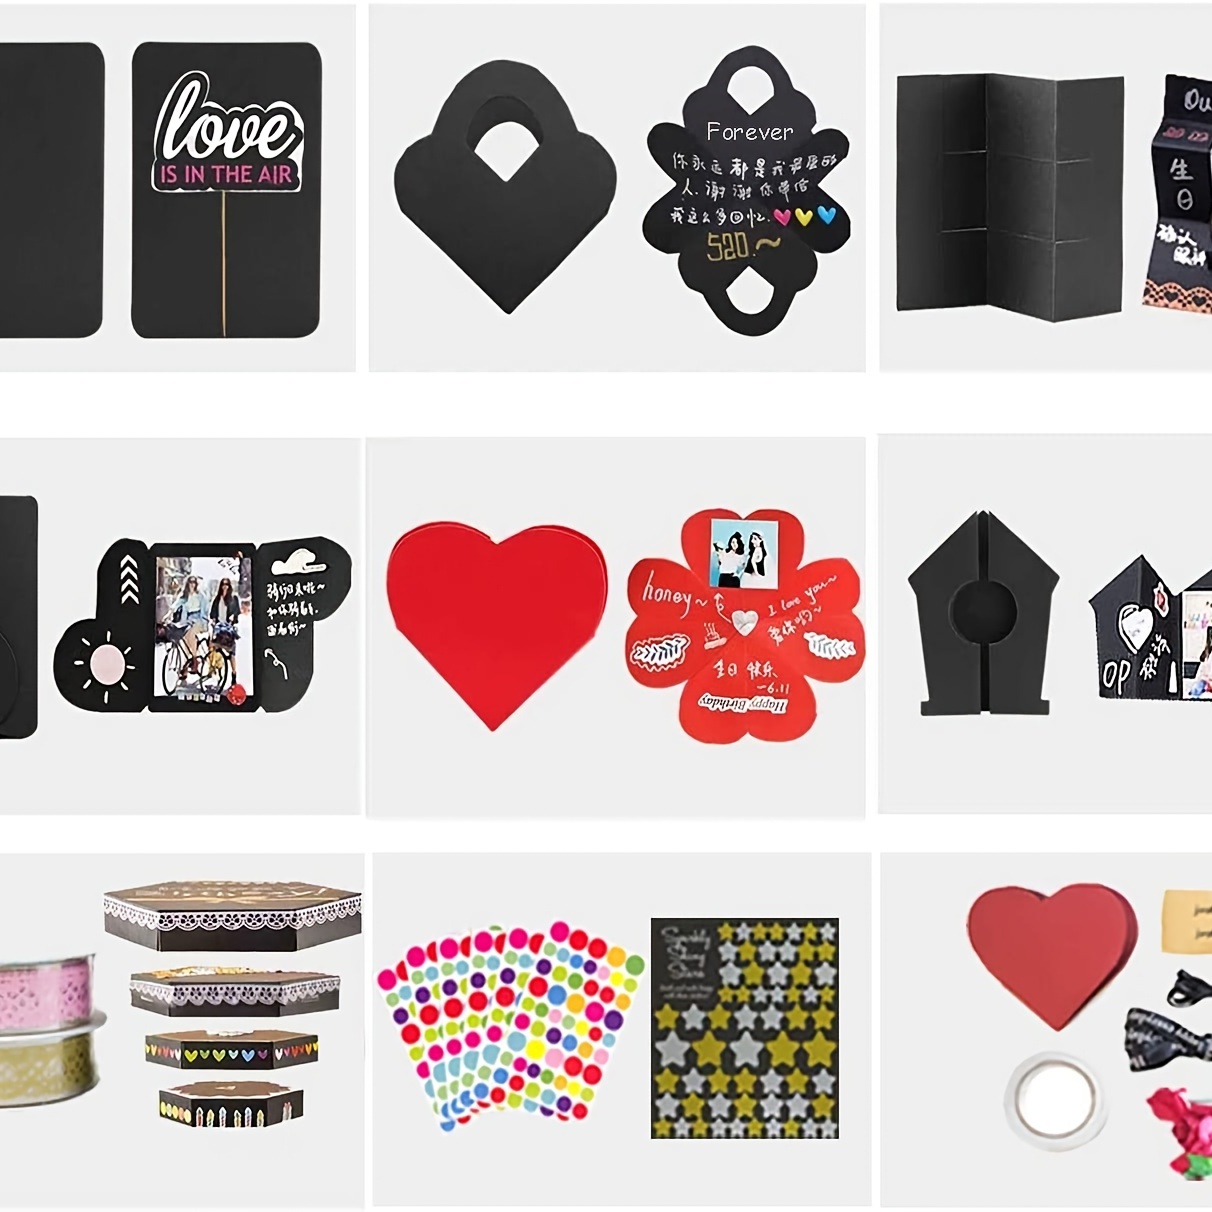  Wanateber Explosion Box DIY Gift - Love Memory, Scrapbook,  Photo Box for Birthday Gift, Anniversary,Wedding or Valentine's Day  Surprise Box (Black) : Home & Kitchen